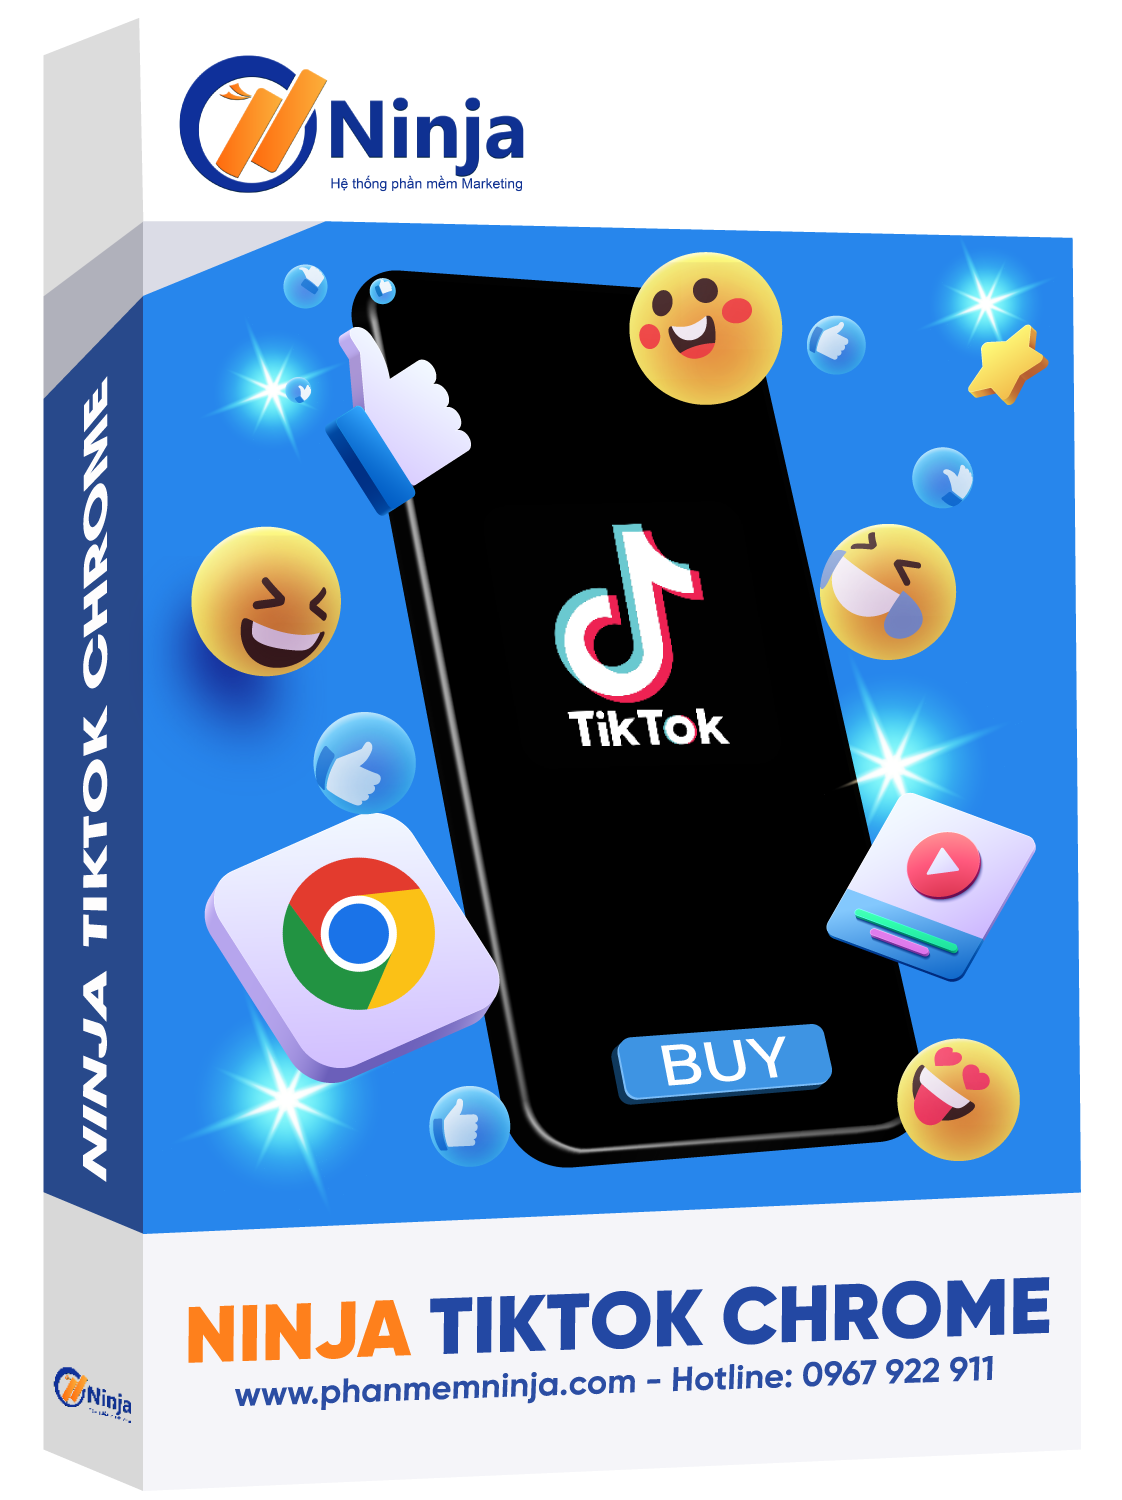 Ninja-Tiktok-Chrome.png